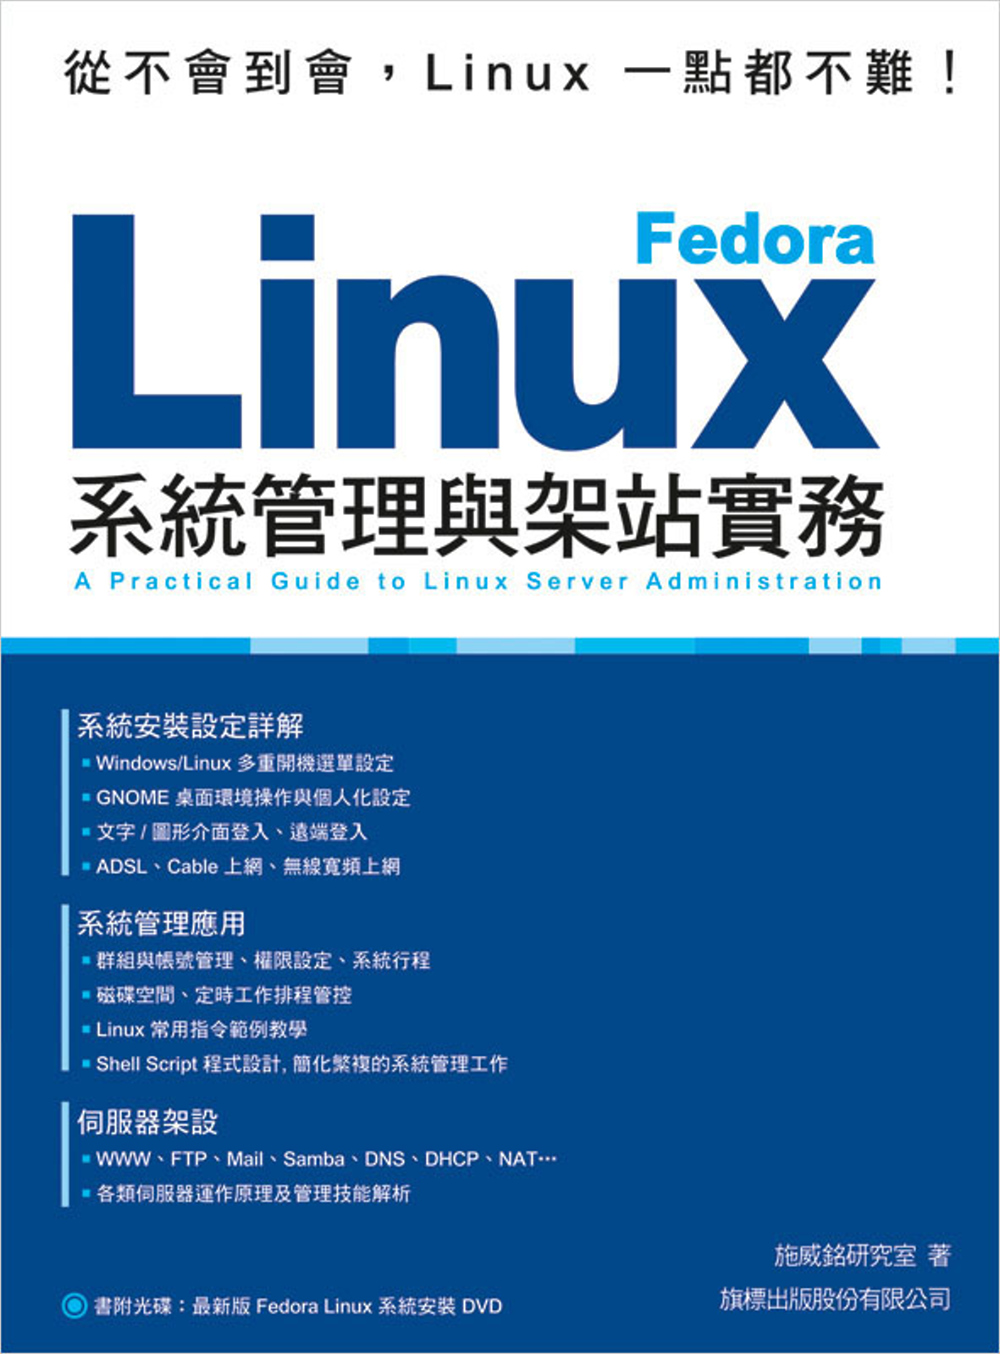 Fedora Linux 系統管理與架站實務